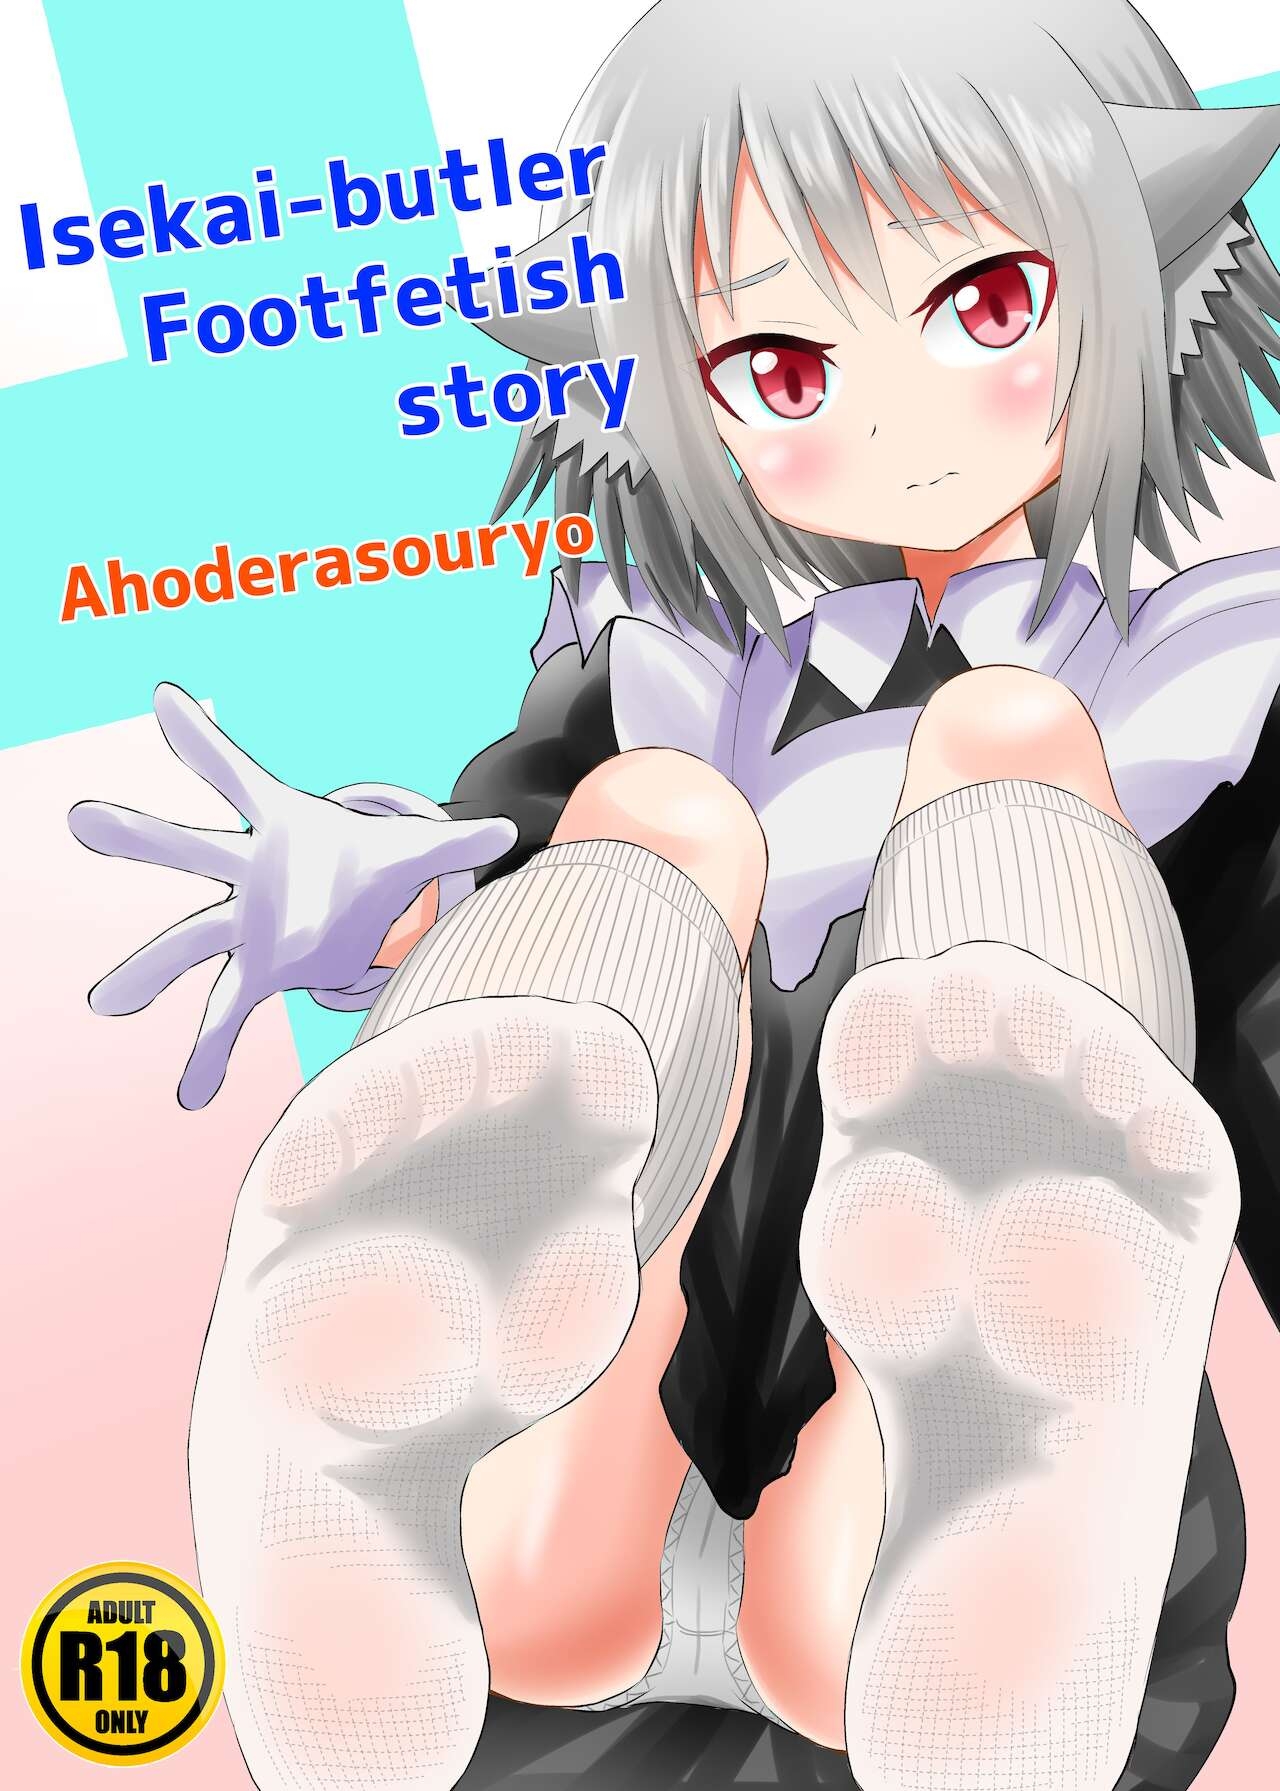 [Ahoderasouryo] Isekai Maid Ashi Feti Monogatari 2 - Isekai-butler Footfetish story [English] 0